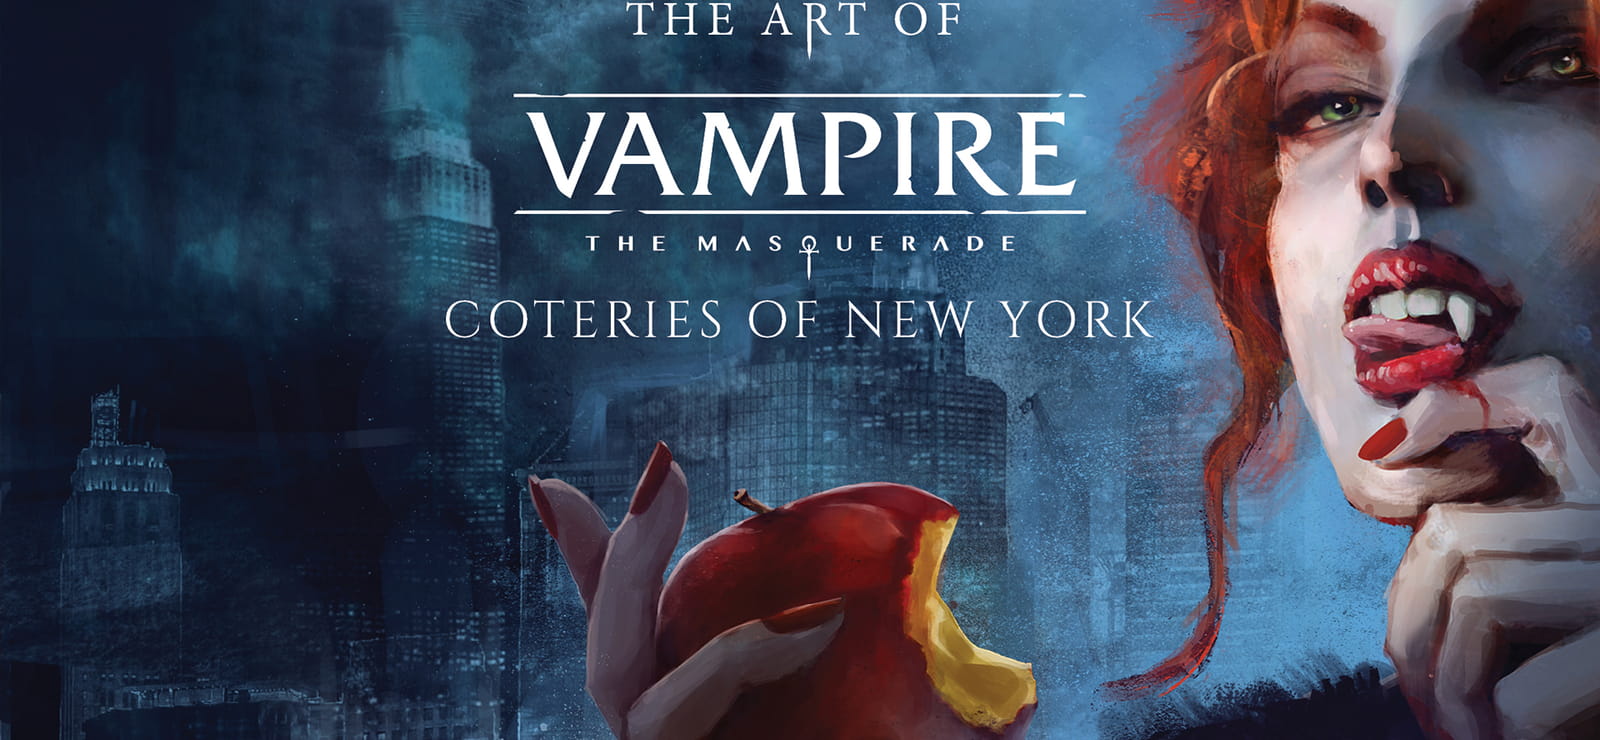 Vampire: The Masquerade - Coteries Of New York Artbook